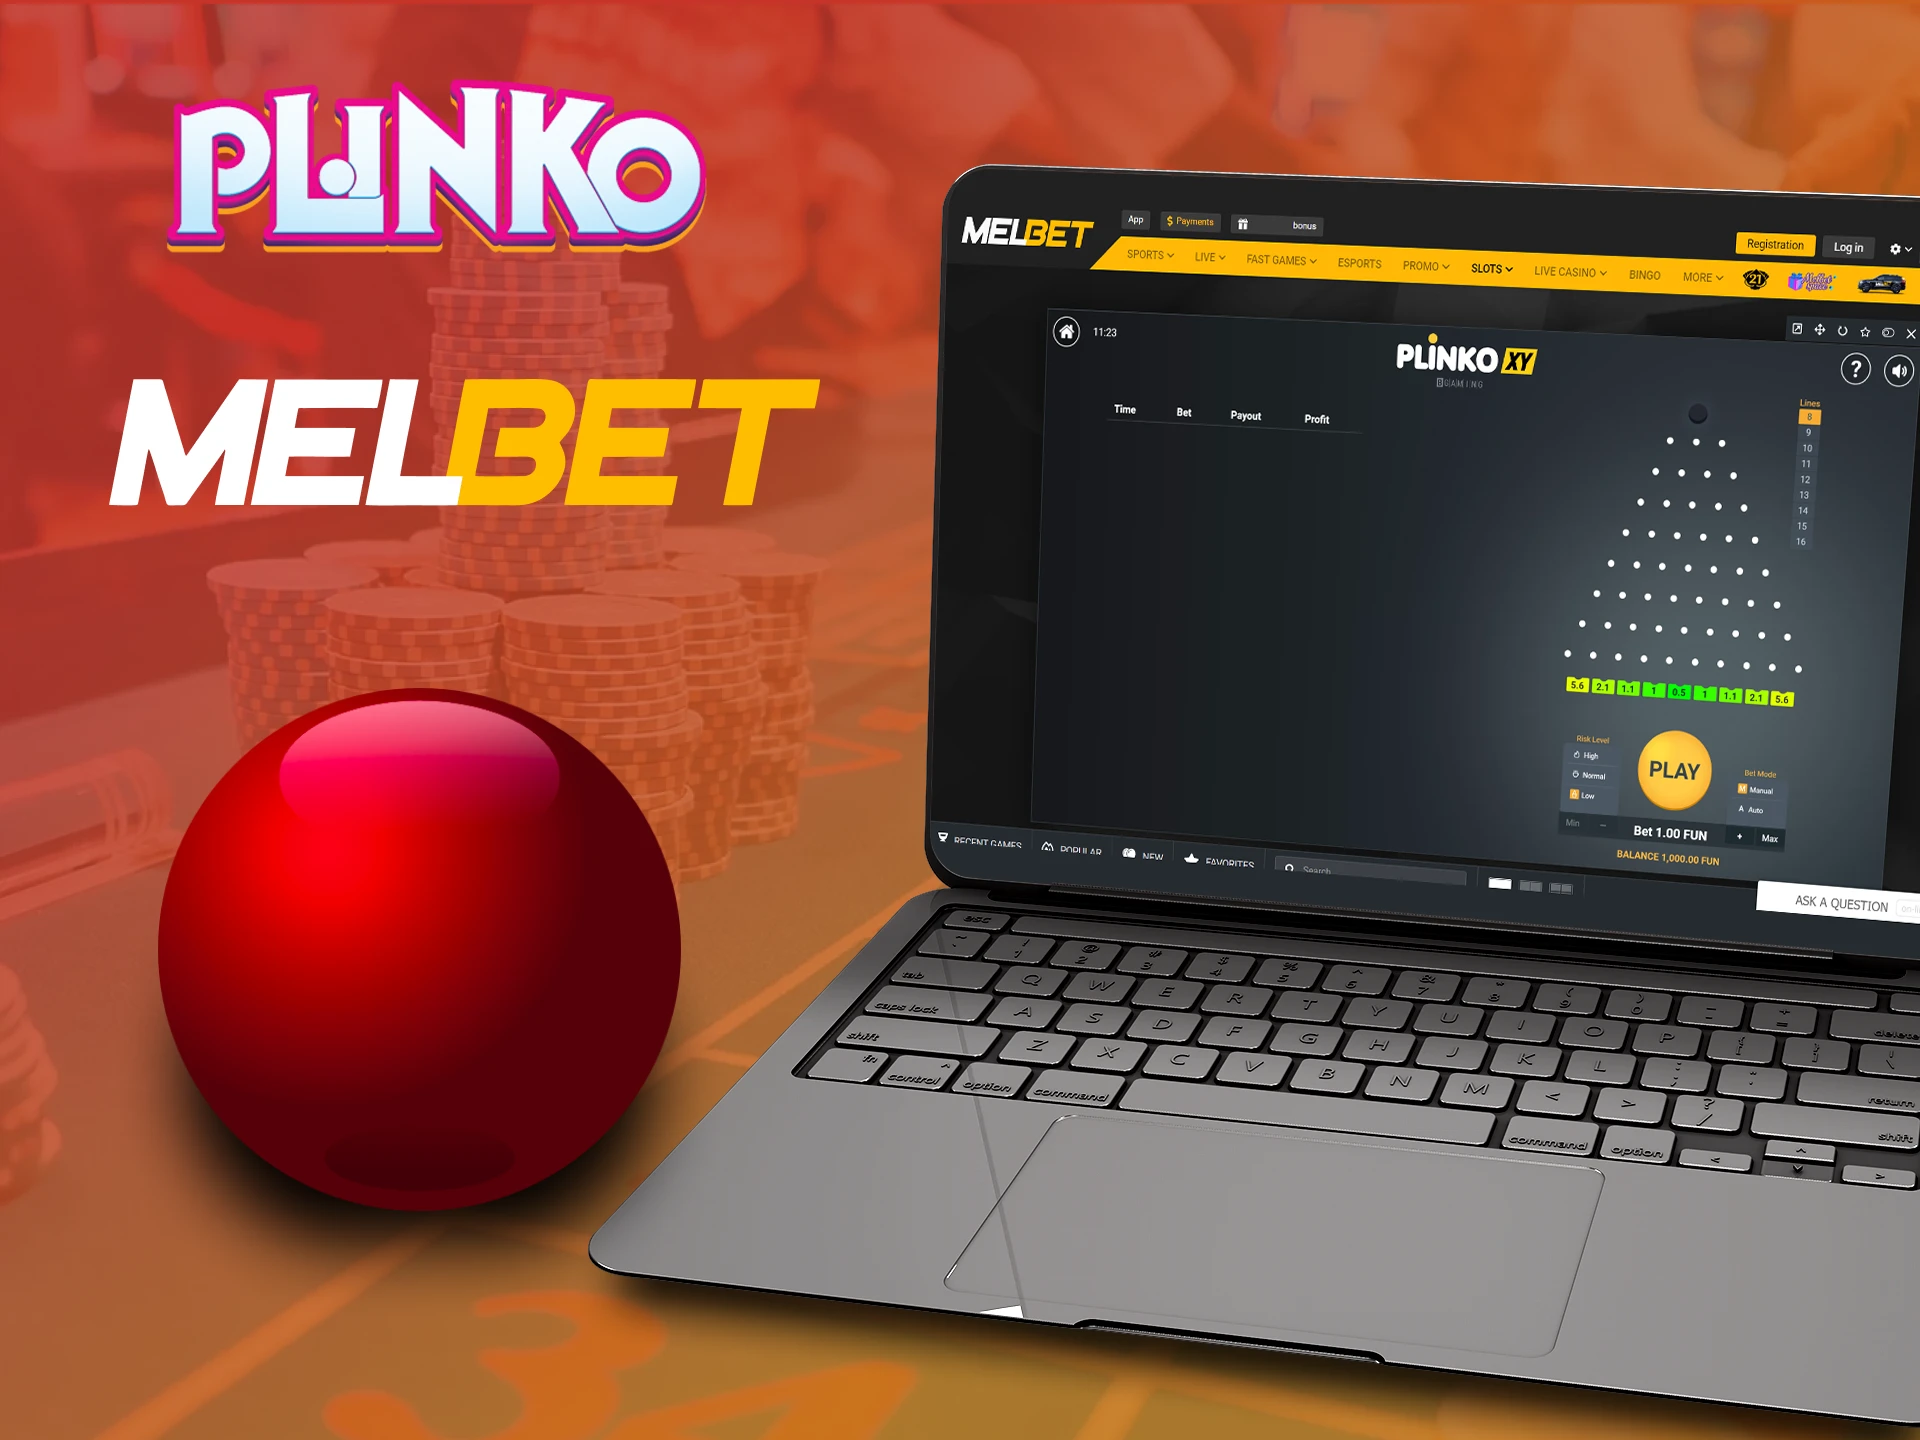 Play Plinko on the Melbet website.